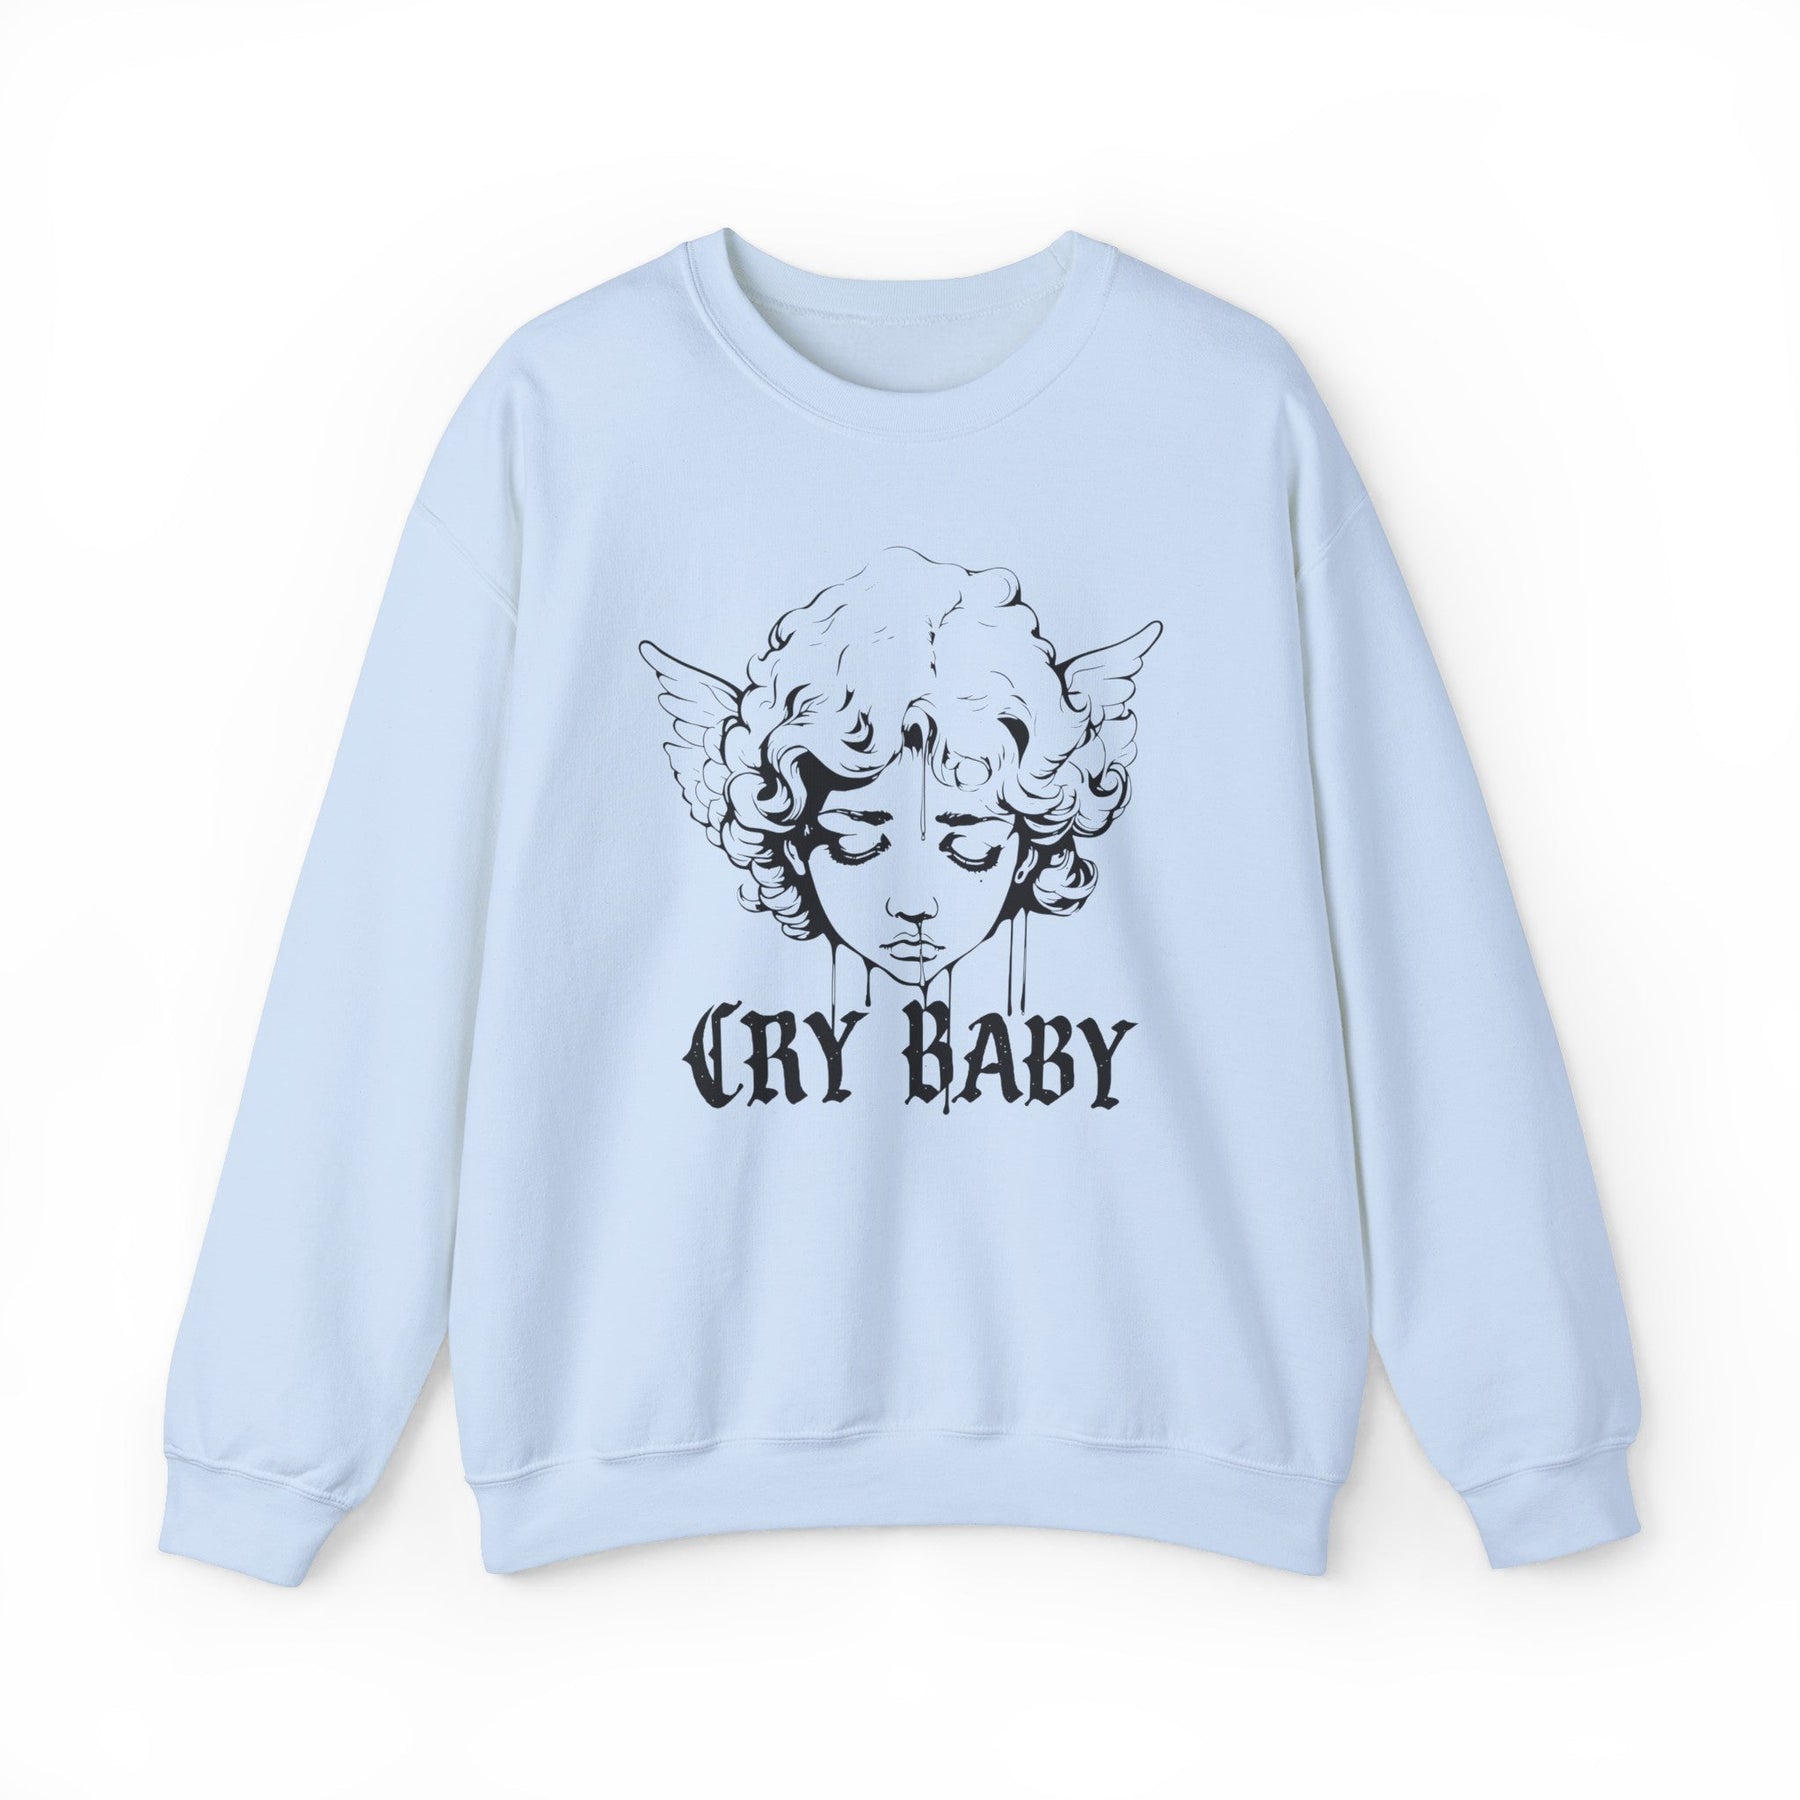 Crybaby Graffiti Cherub Crew Neck Sweatshirt - Goth Cloth Co.Sweatshirt55024491274451218568